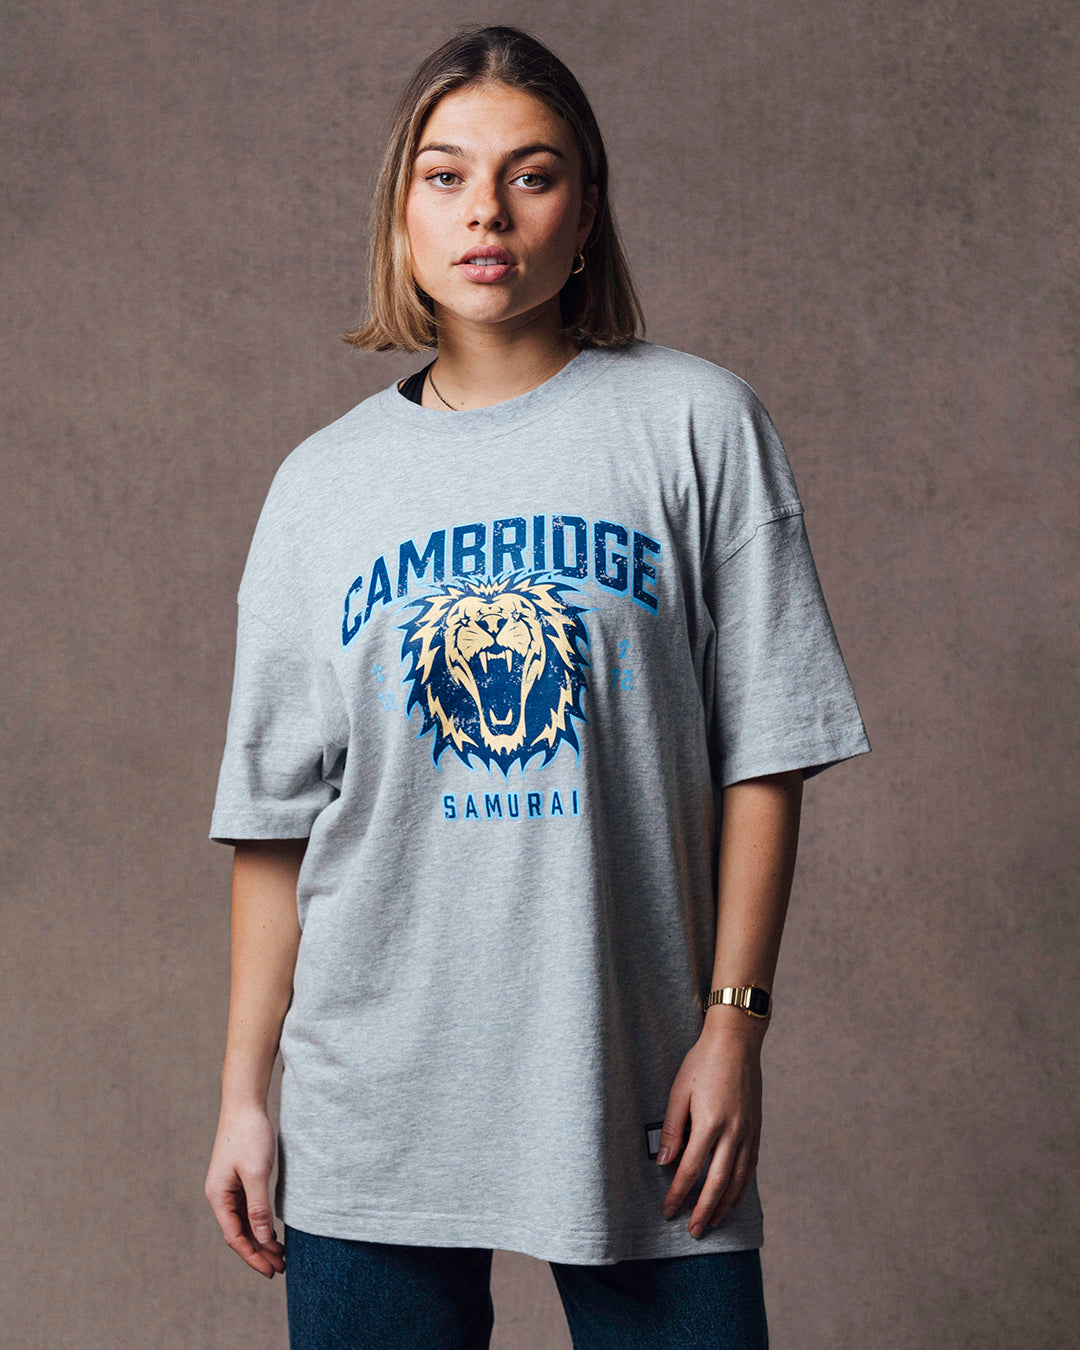 OC: 00-16 - Women's Cambridge T-Shirt - Grey